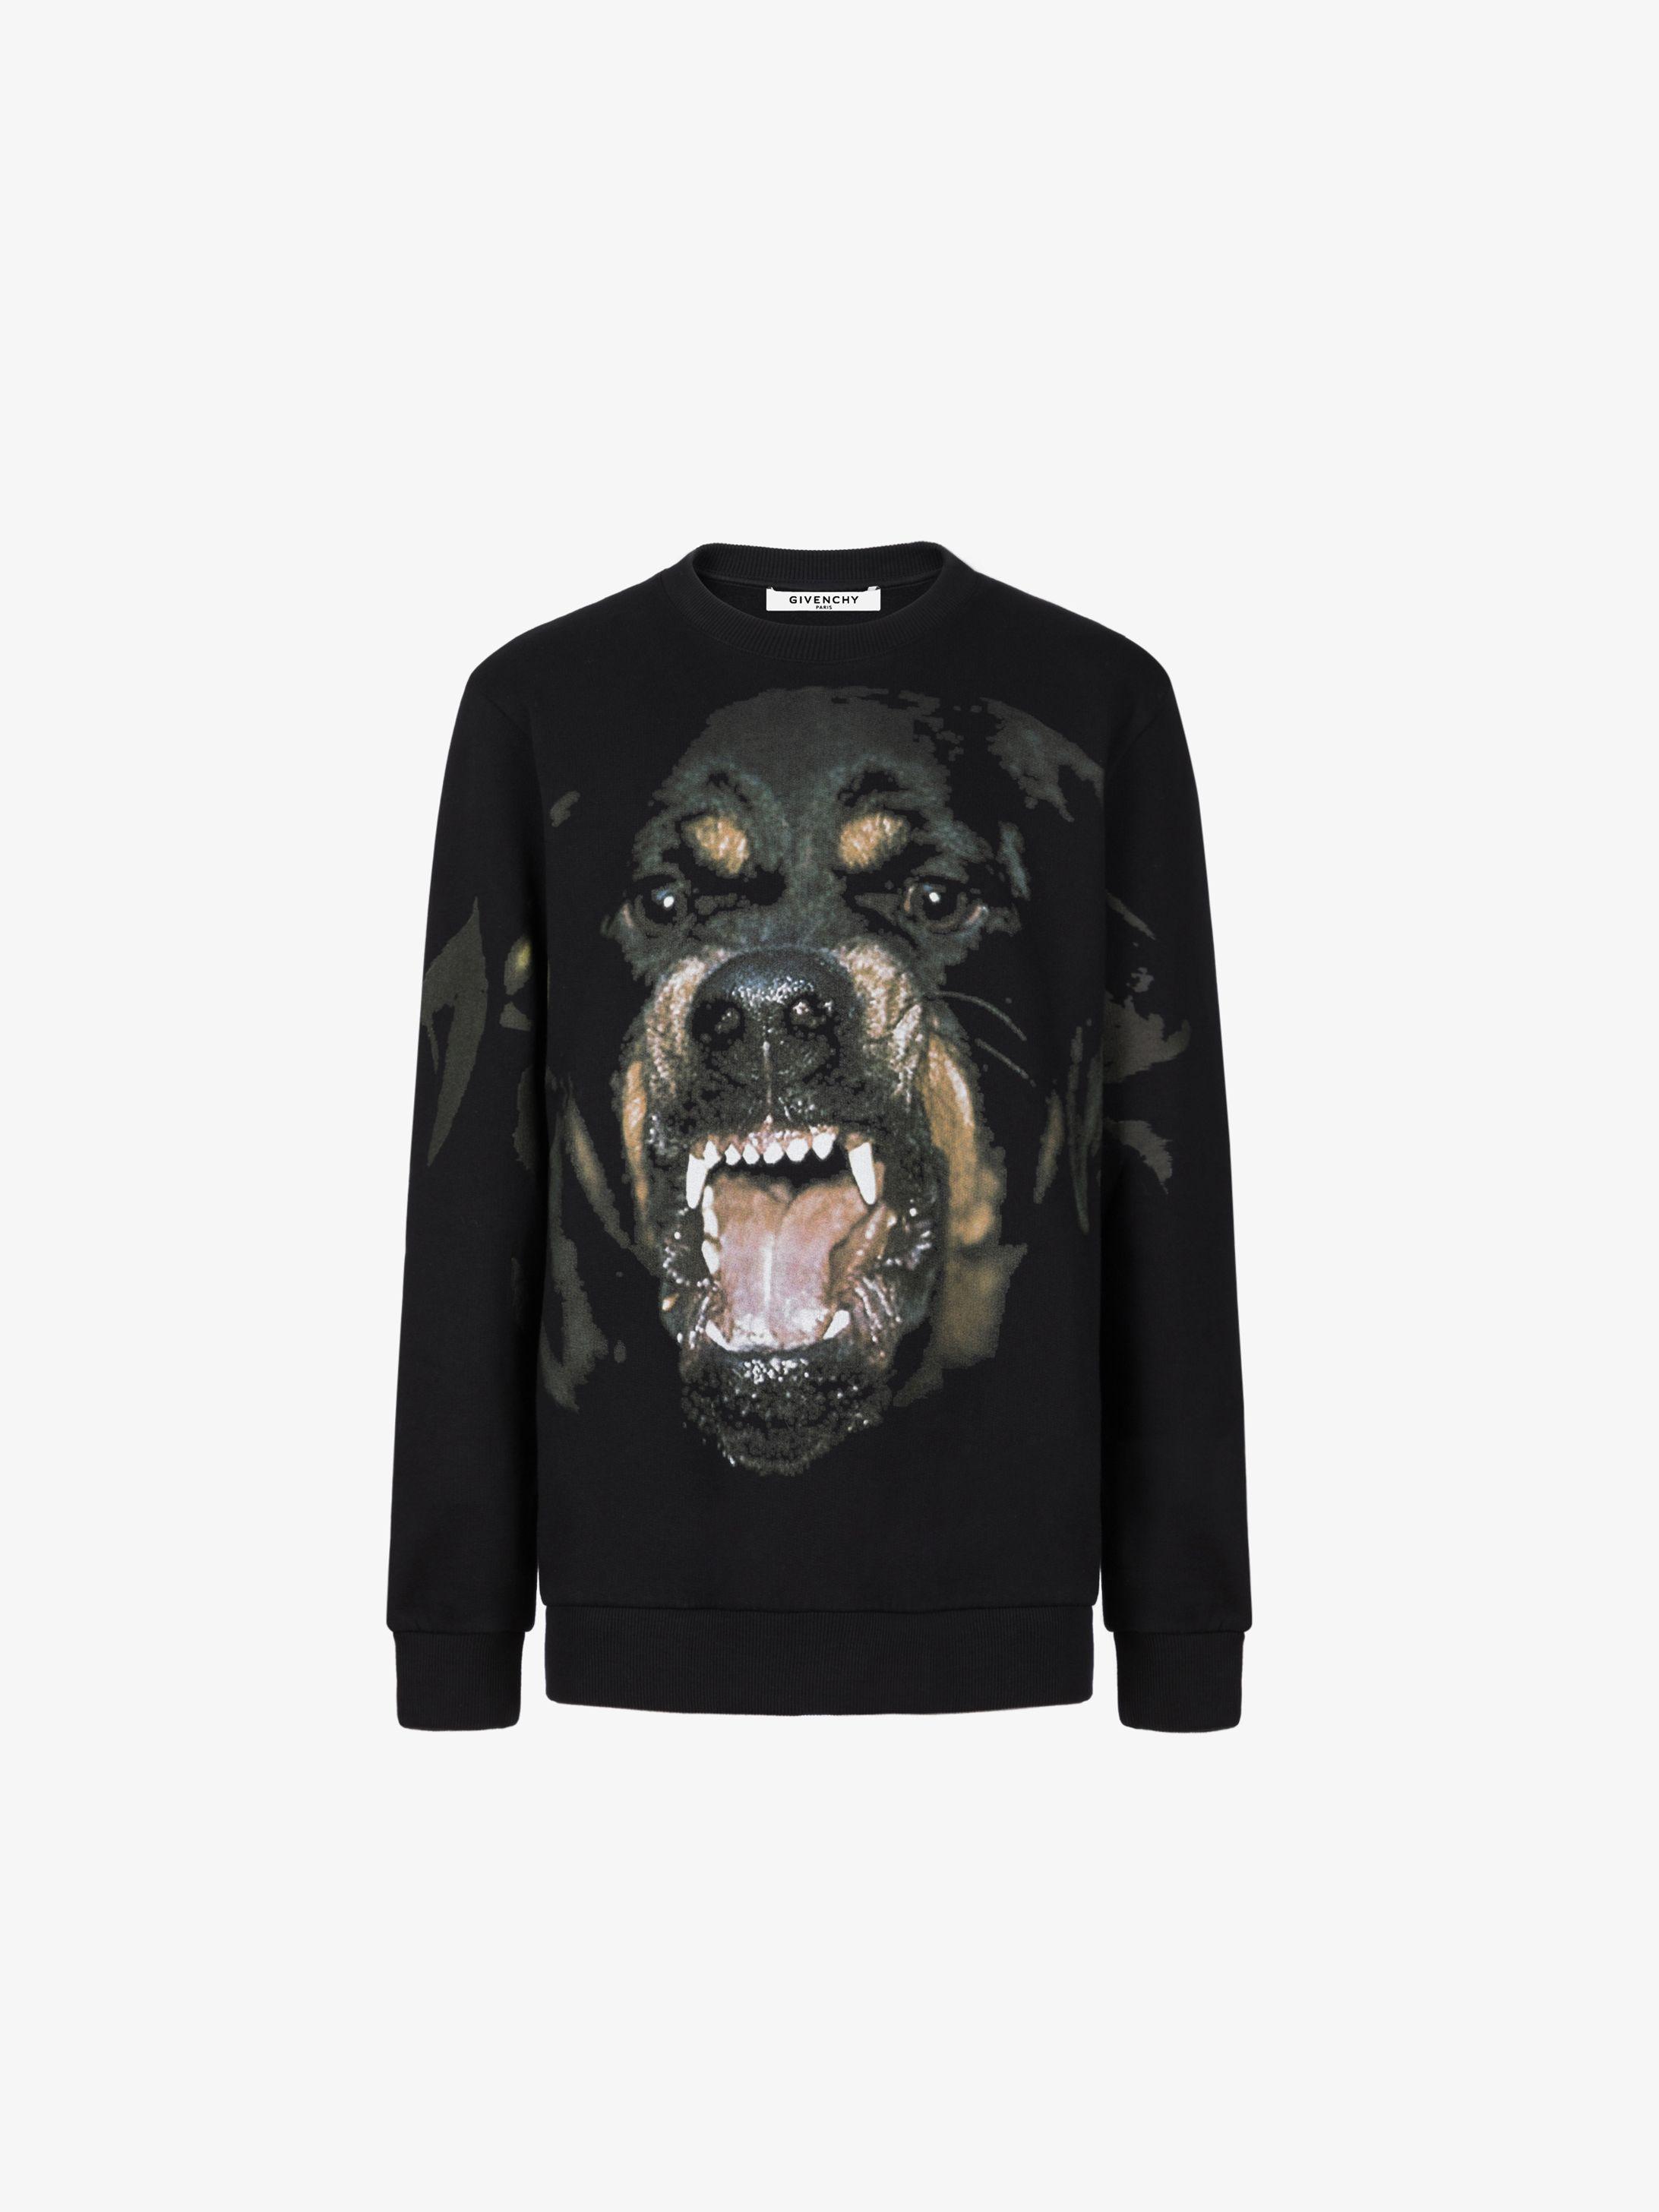 Givenchy Rottweiler Logo - Givenchy Rottweiler printed sweatshirt